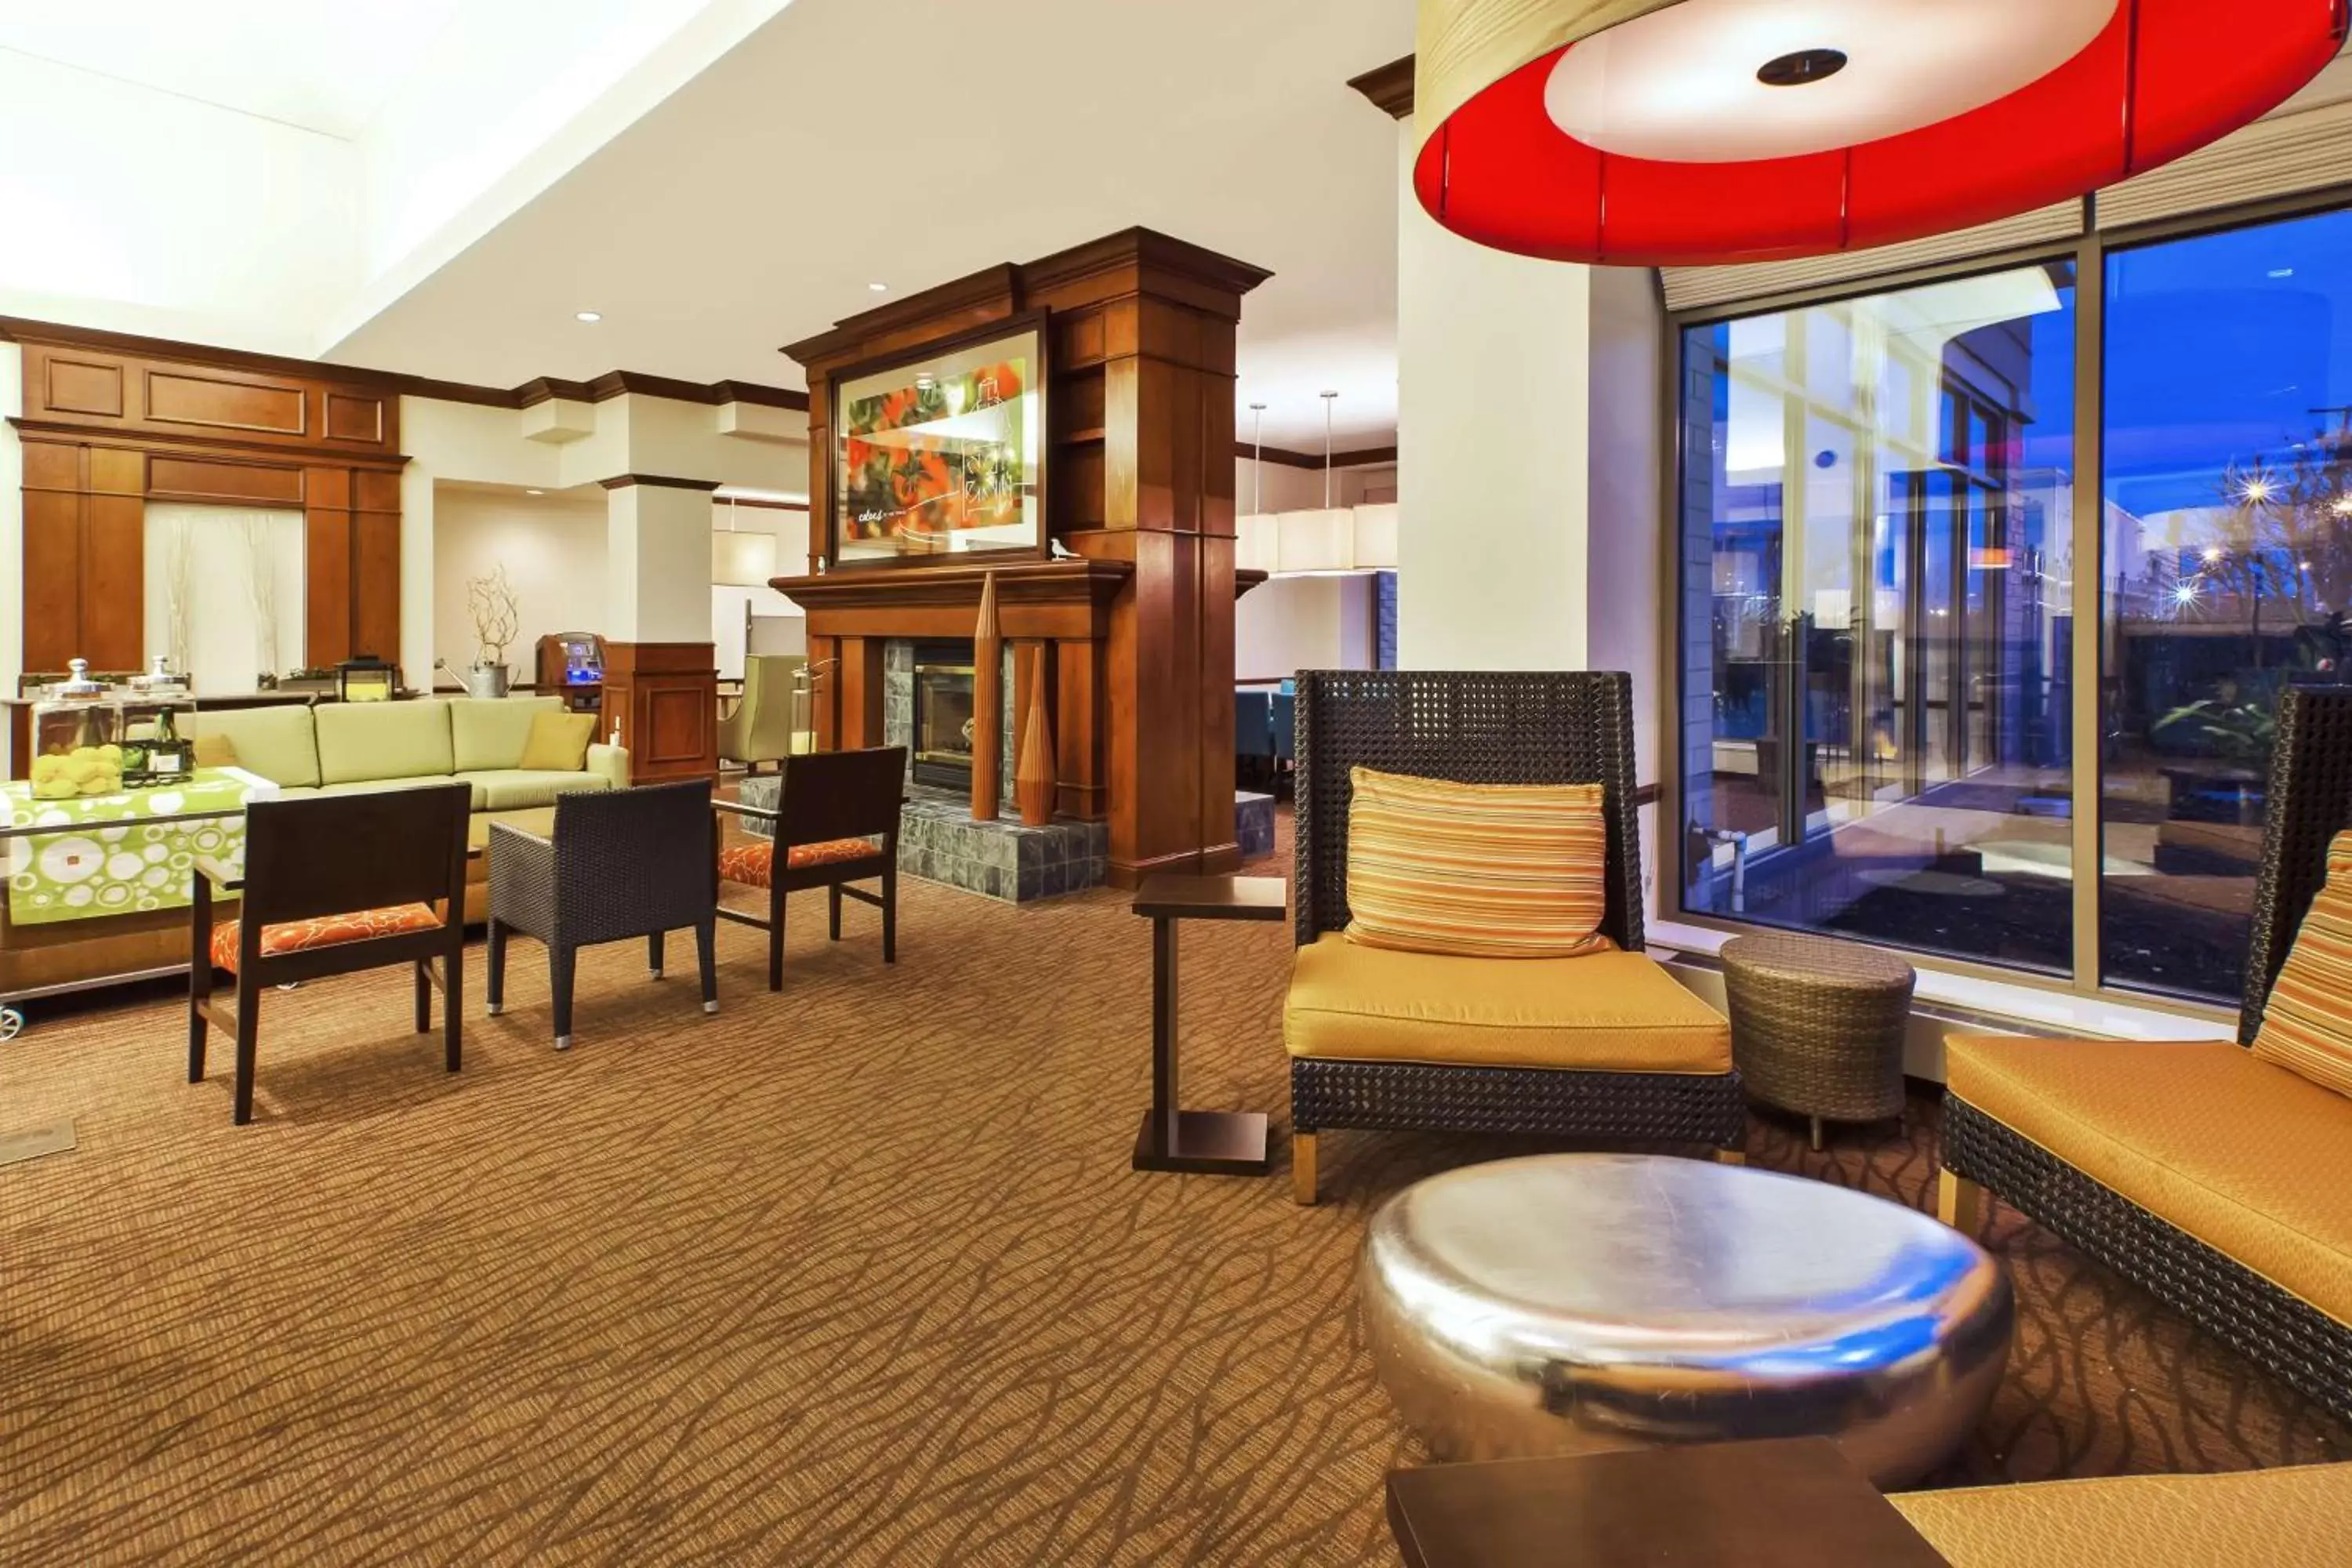 Lobby or reception in Hilton Garden Inn Cleveland Downtown